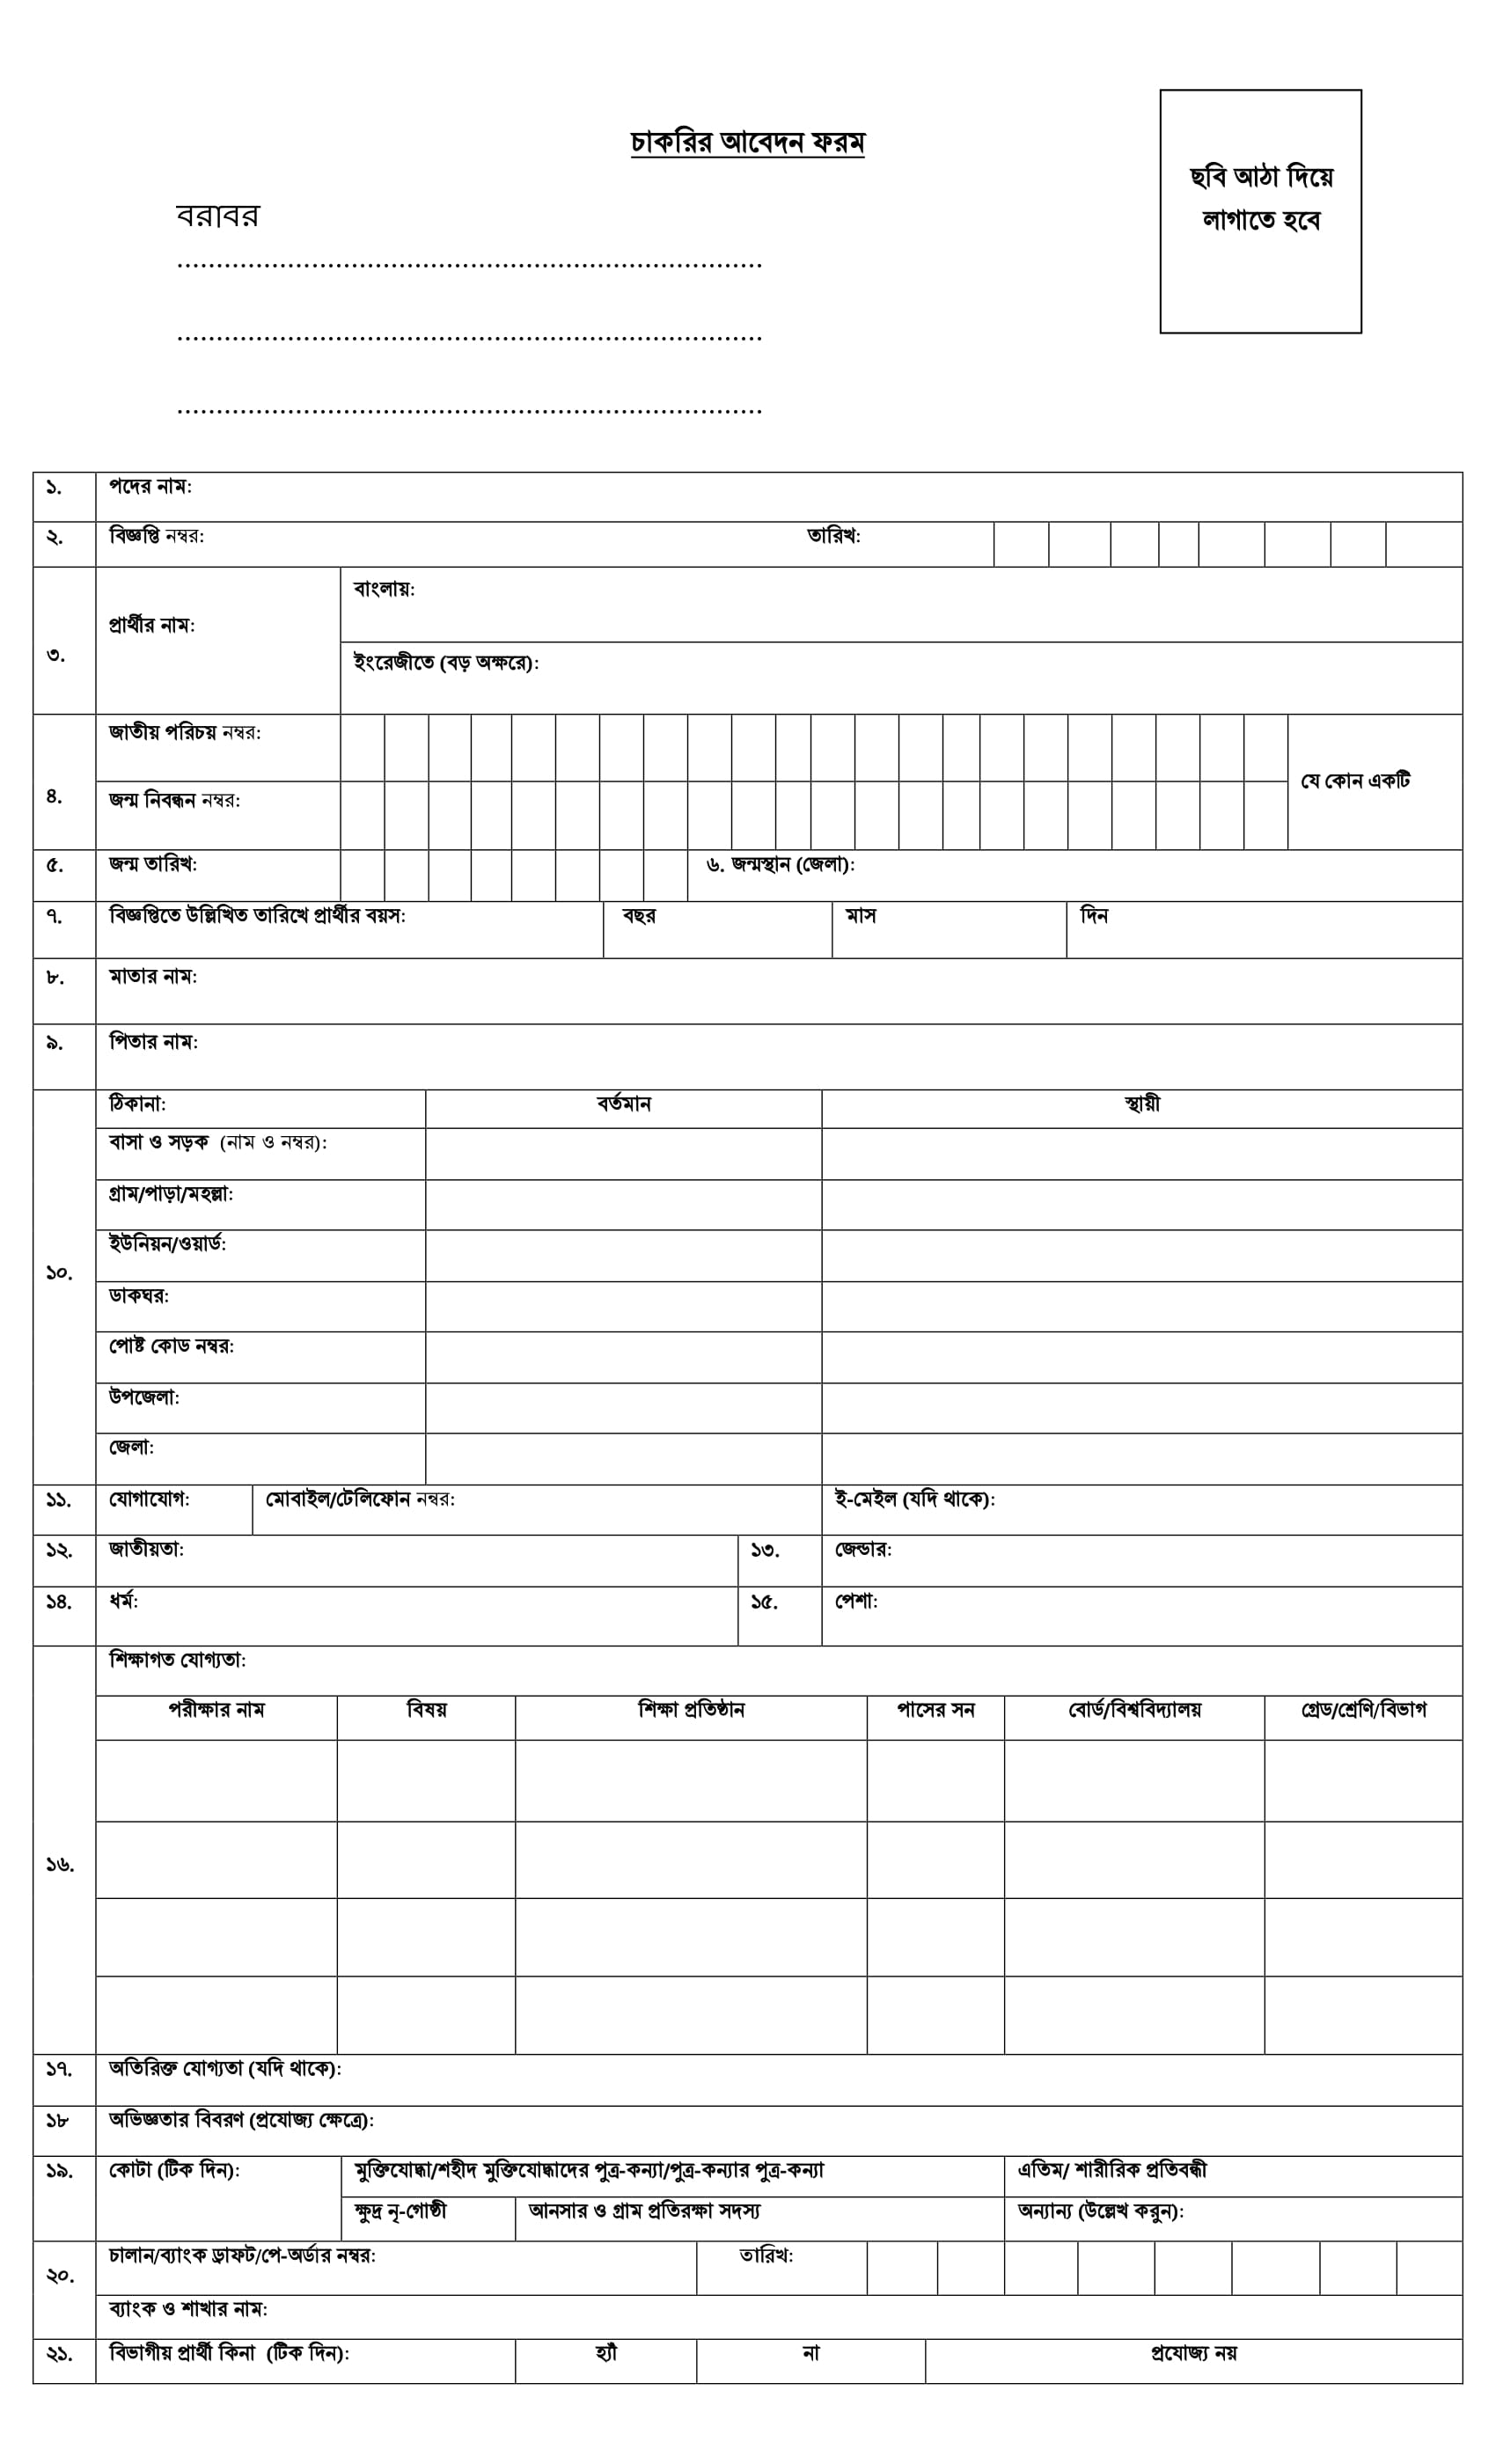 Satkhira DC Office Job Application form 